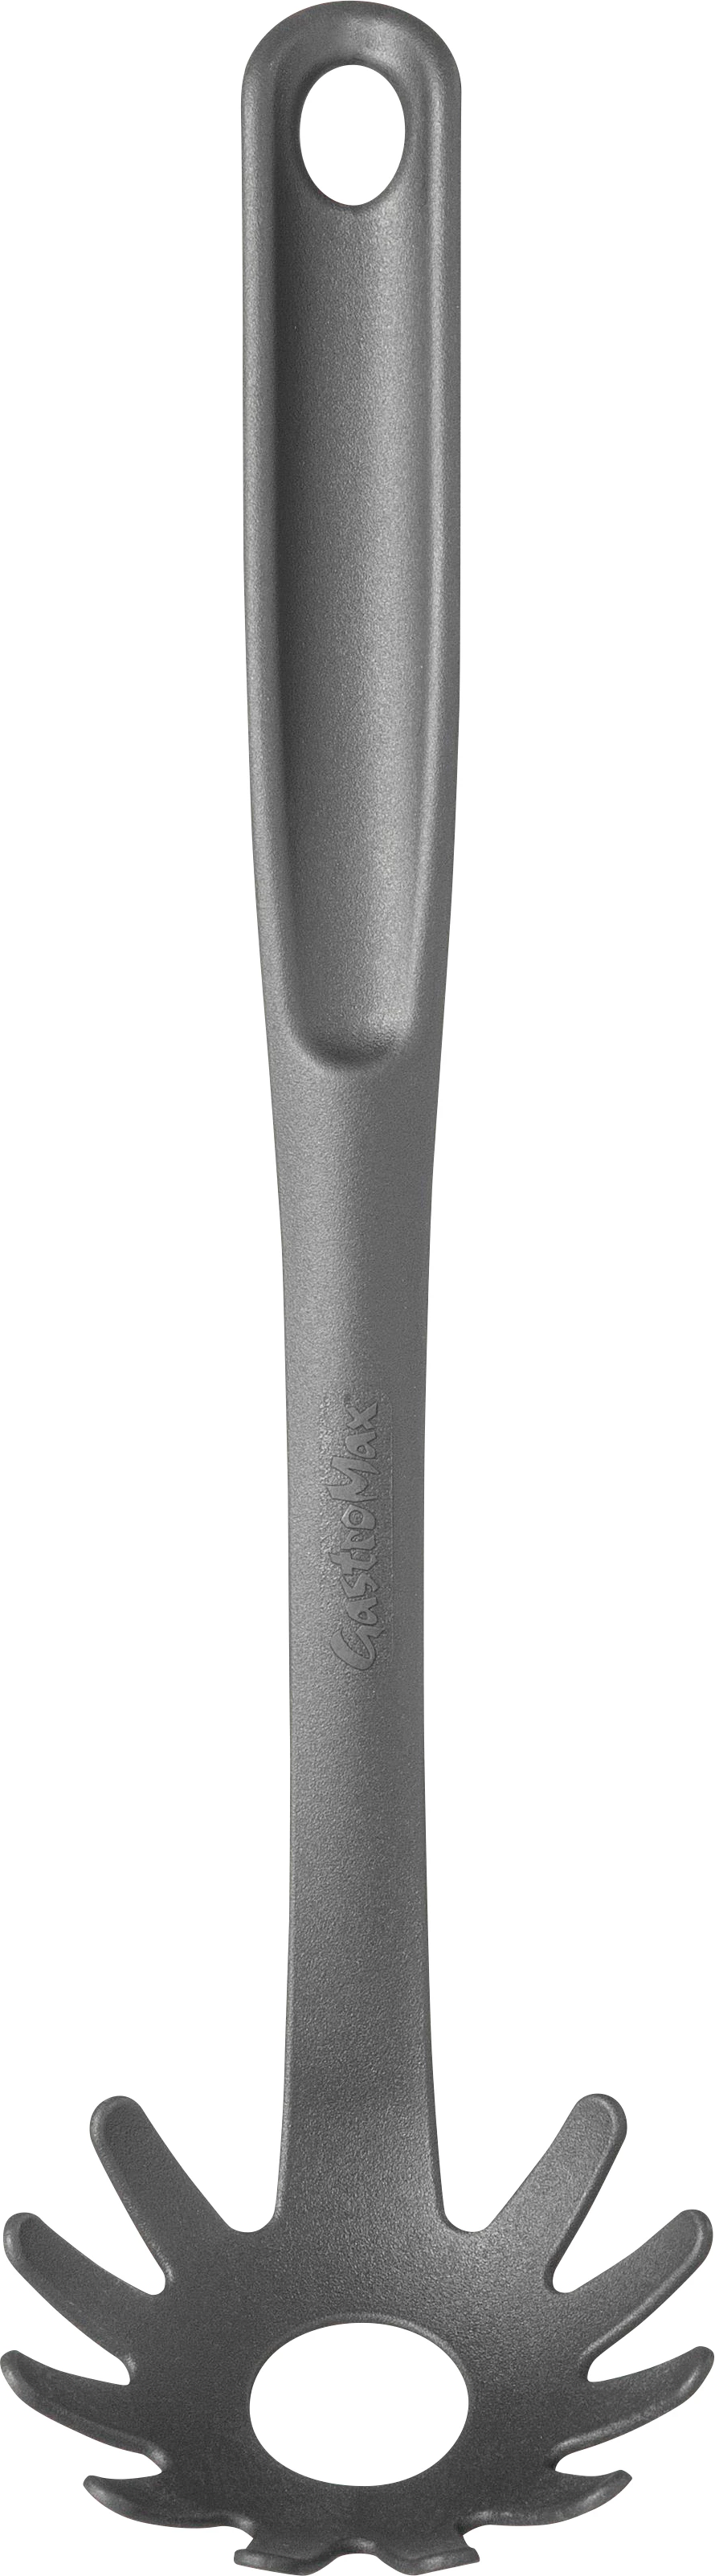 Orthex GastroMax BIO spaghettiske, grå, bioplast, 30 cm